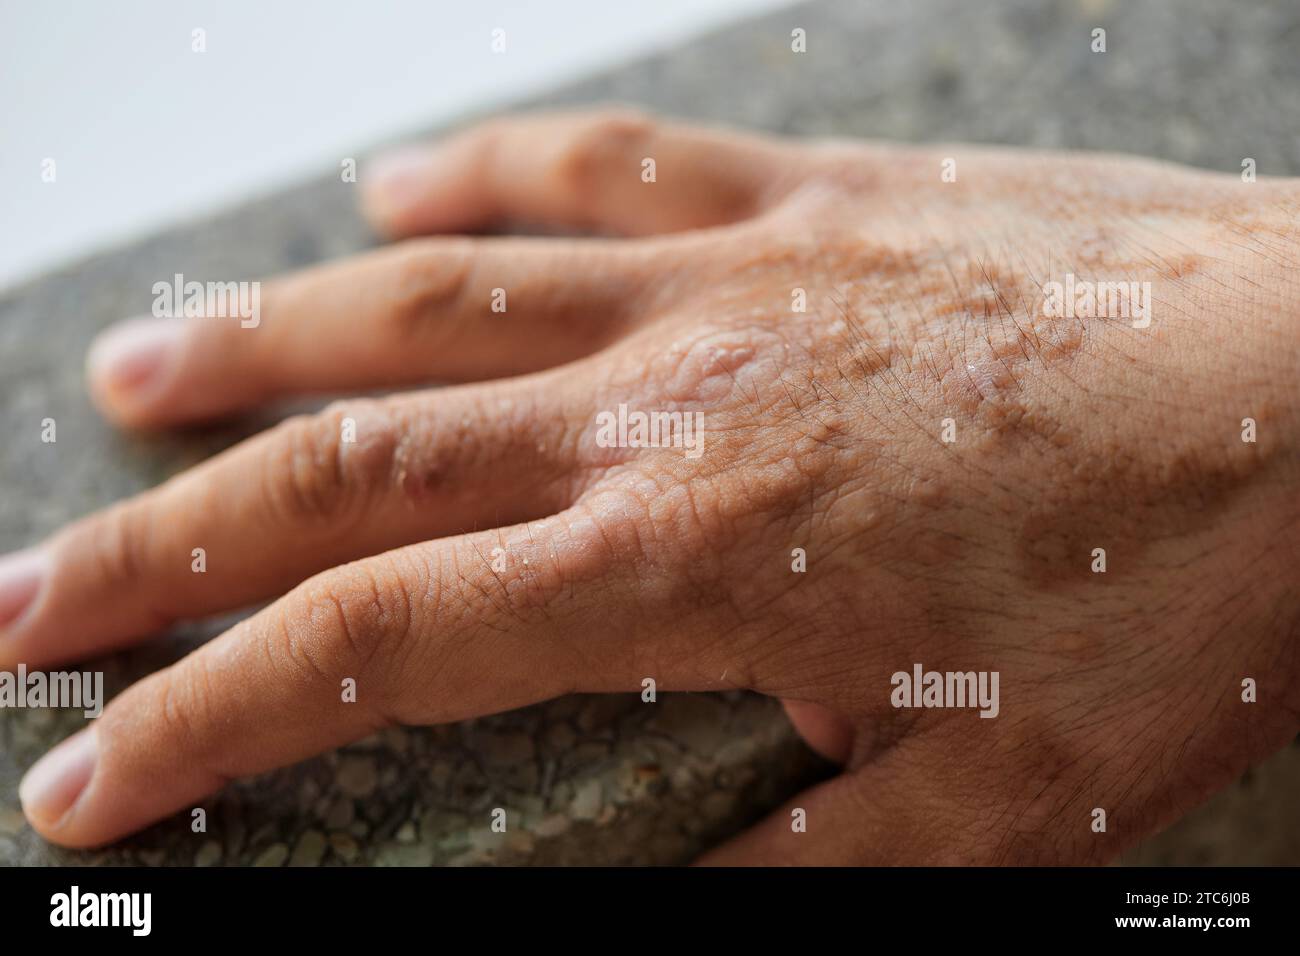 Close-up of Chronic skin diseases dermatitis Stock Photo